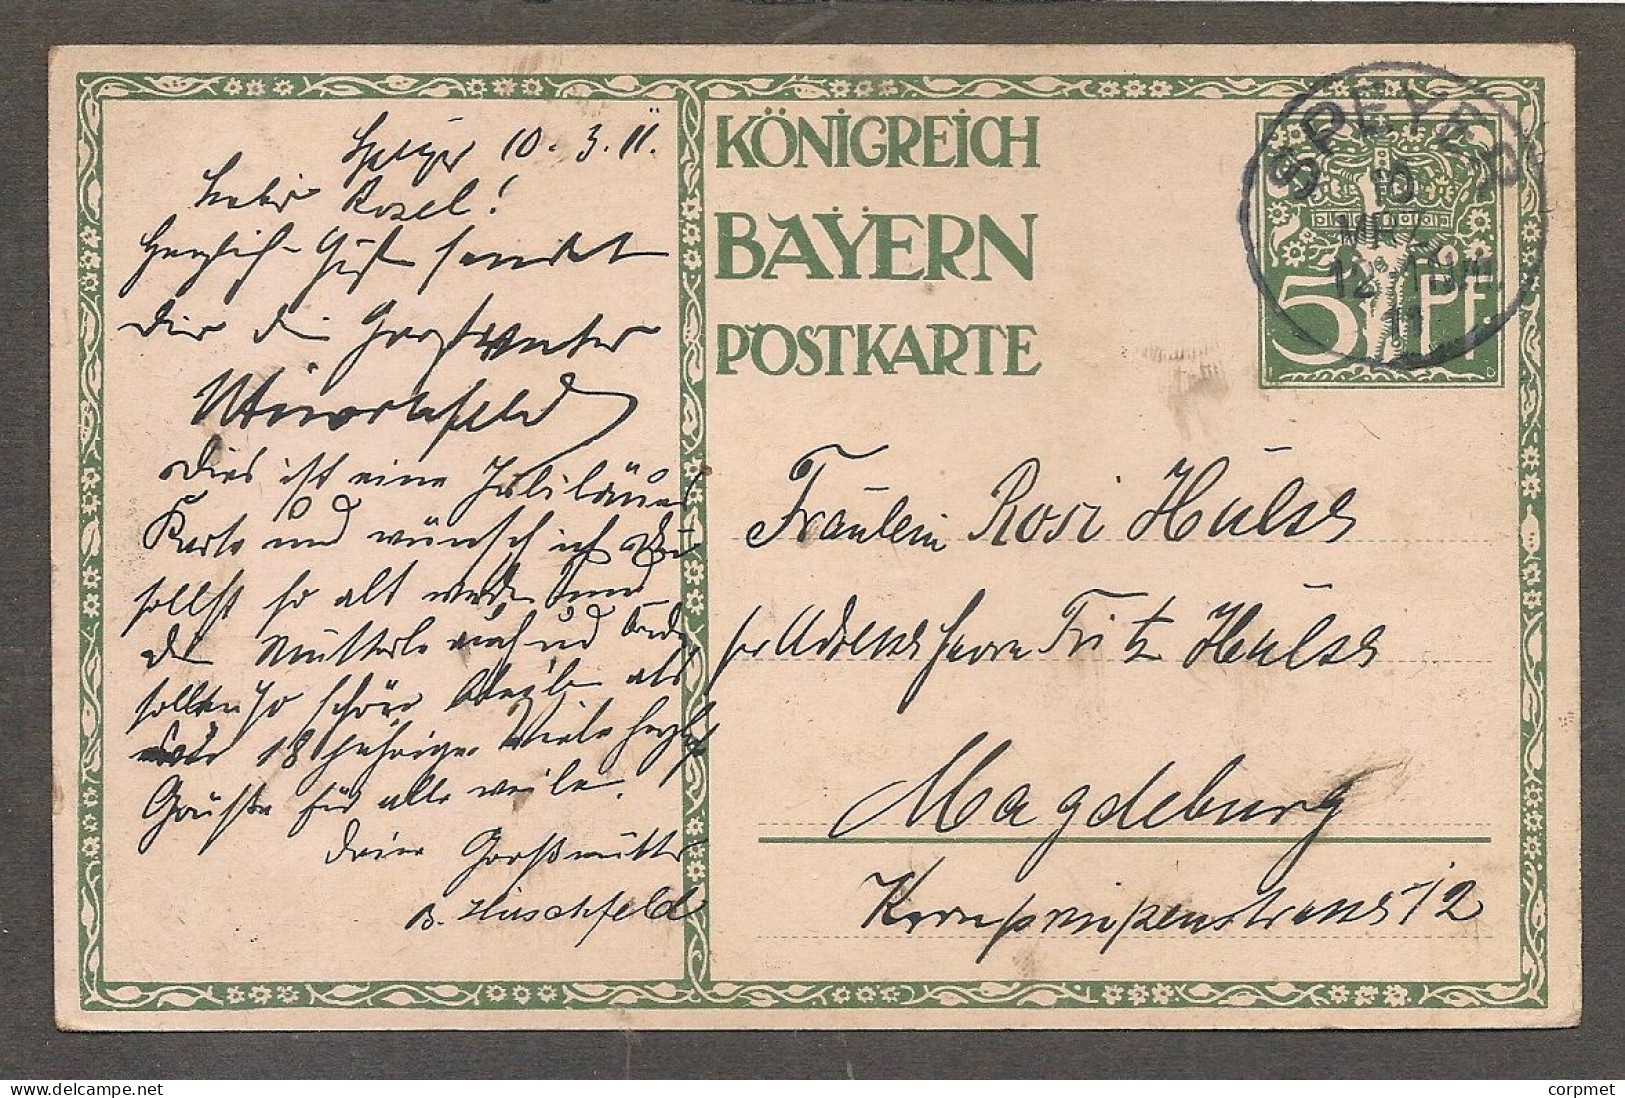 DEUTSCHLAND GERMANY KONIGREICH BAYERN POSTKARTE 1821-1911 - ILLUSTRATEUR DIEZ POSTKARTE - Vf SPEYER To MAGDEBURG 10/3/11 - Covers & Documents